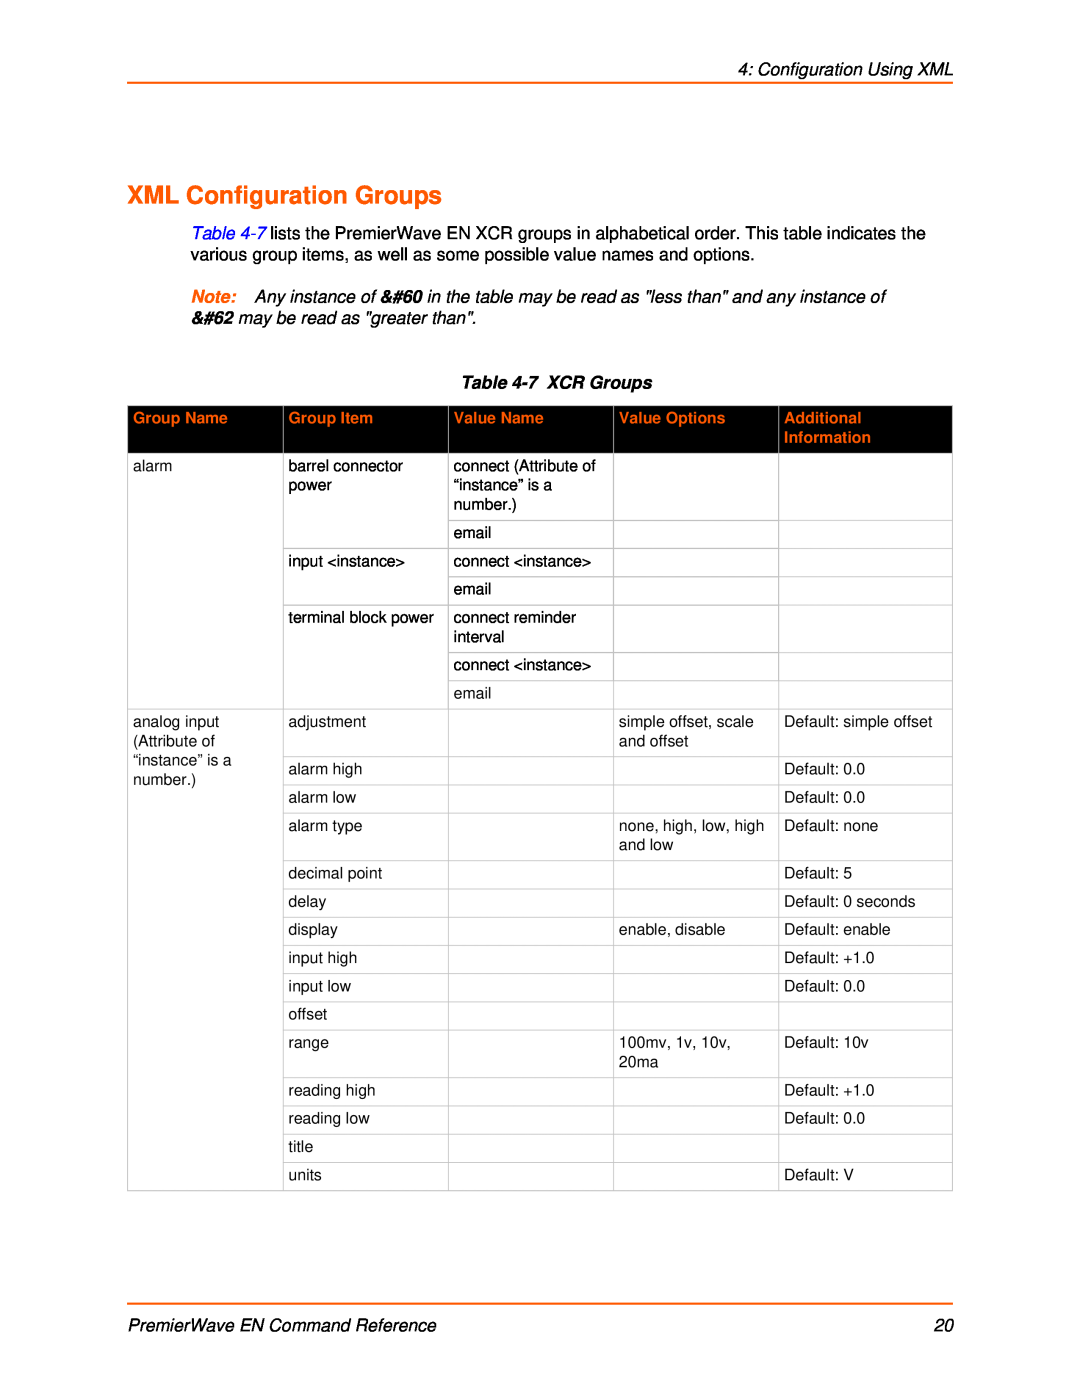 Lantronix 900-581 manual XML Configuration Groups, Configuration Using XML, PremierWave EN Command Reference, Group Name 